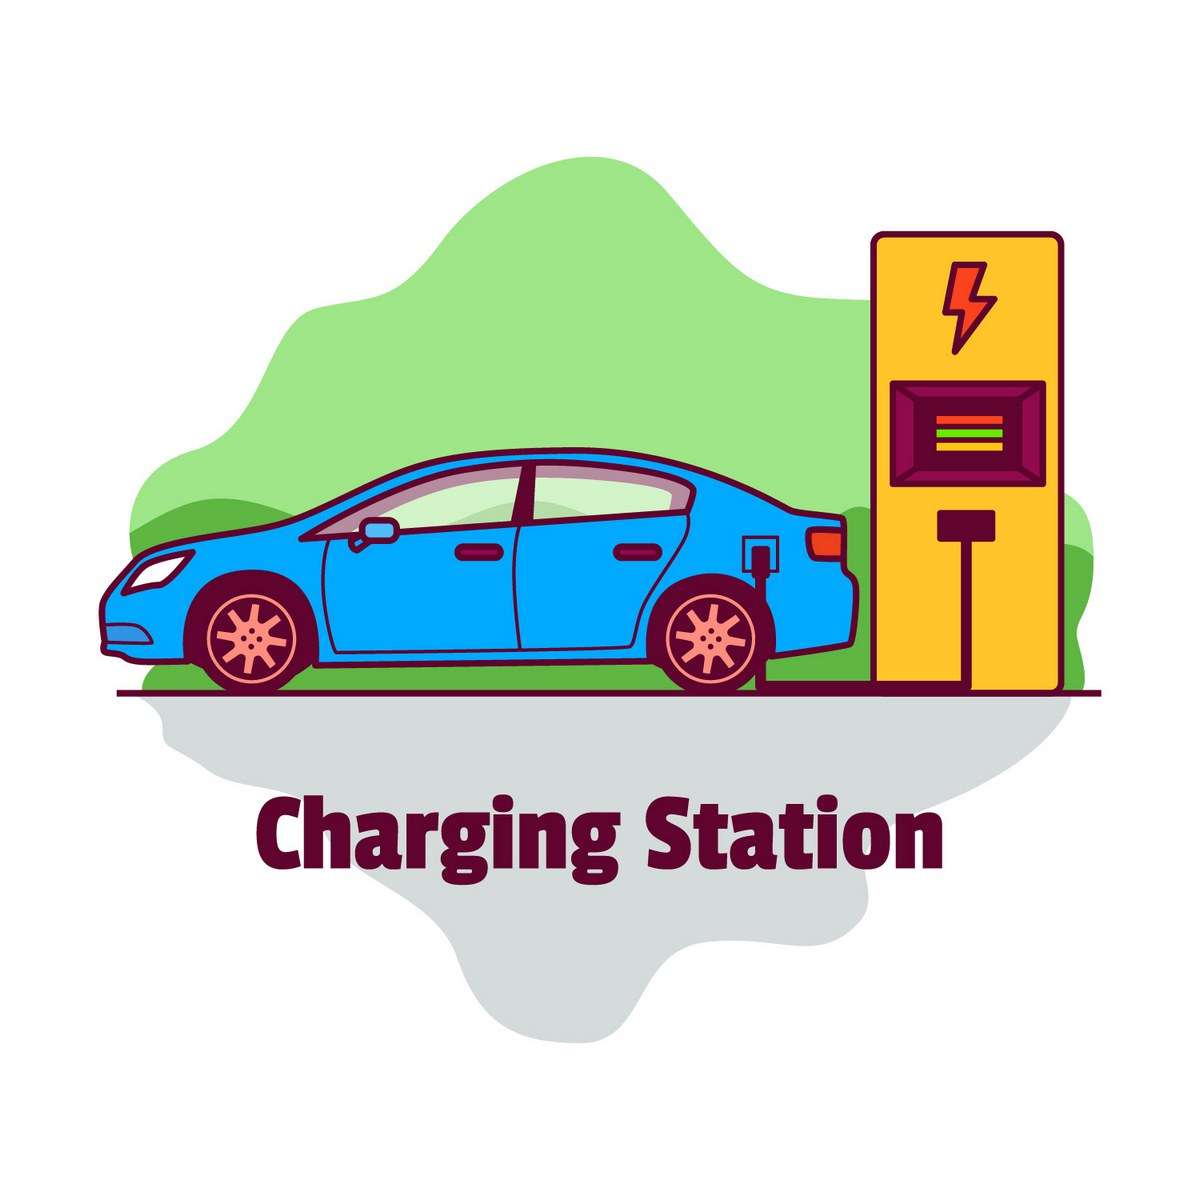 Charging Station Illustration